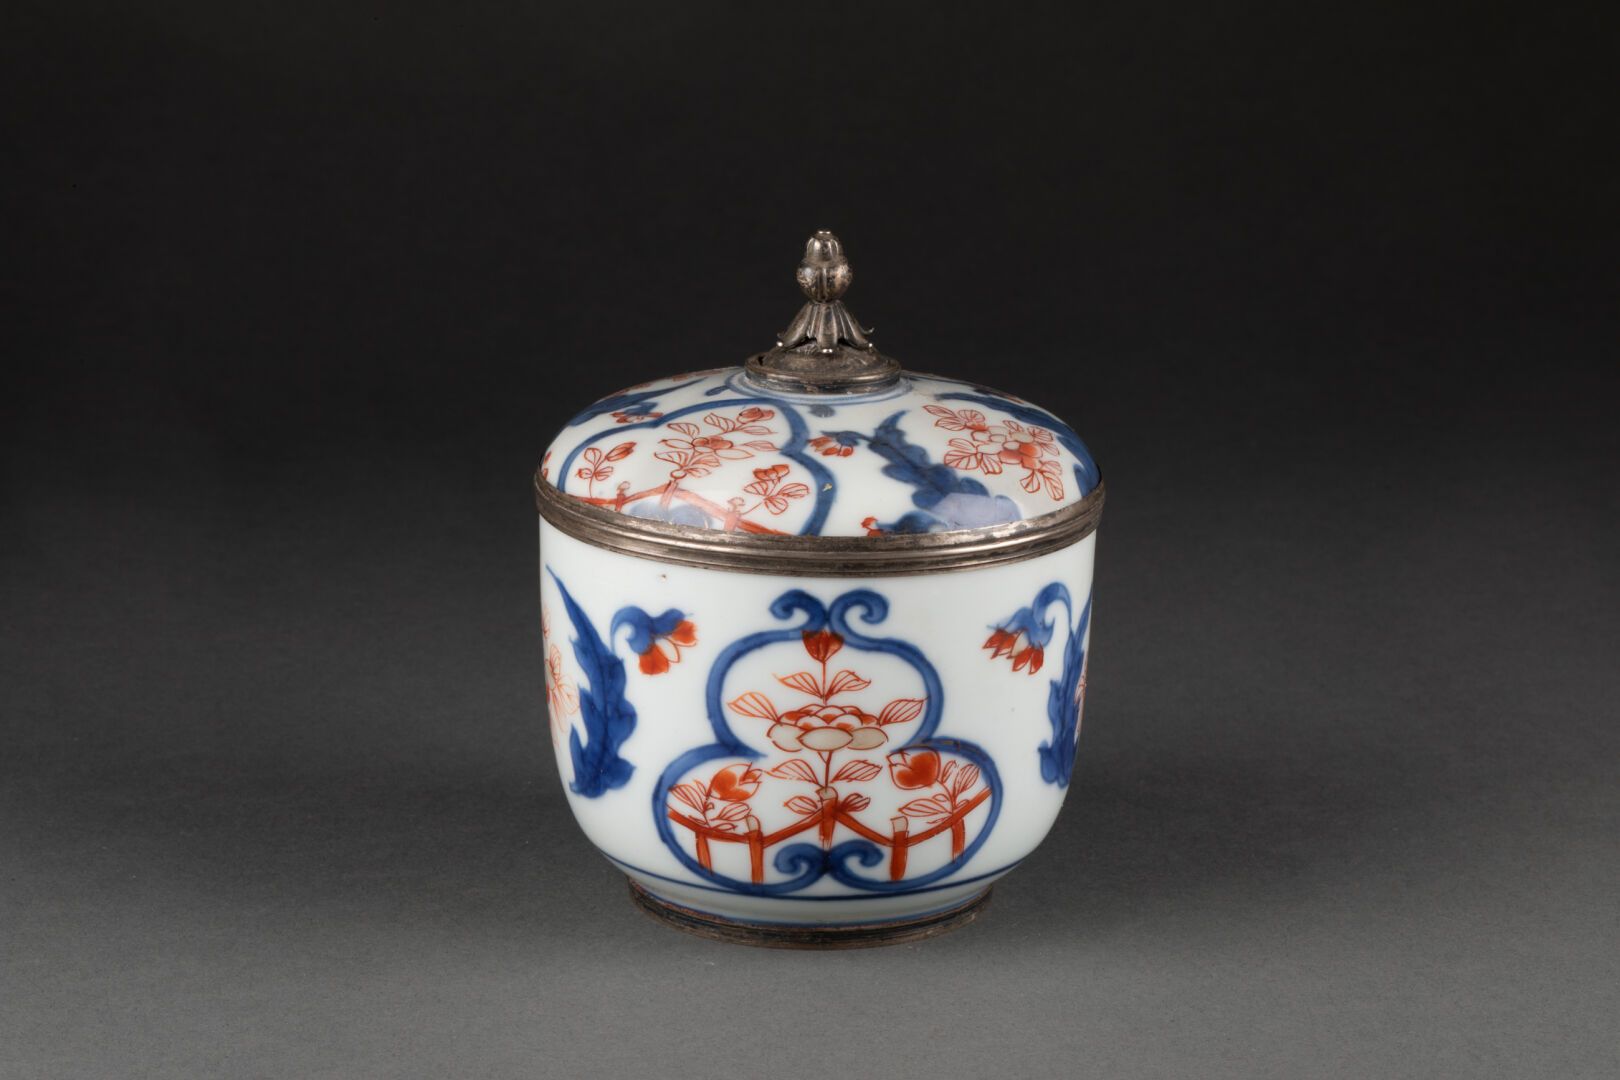 CHINE - XVIIIe siècle 伊万里风格的带花装饰的有盖烛台

瓷器和多色珐琅，银框

H.11 cm - D. 9.3 cm

修复后的盖子